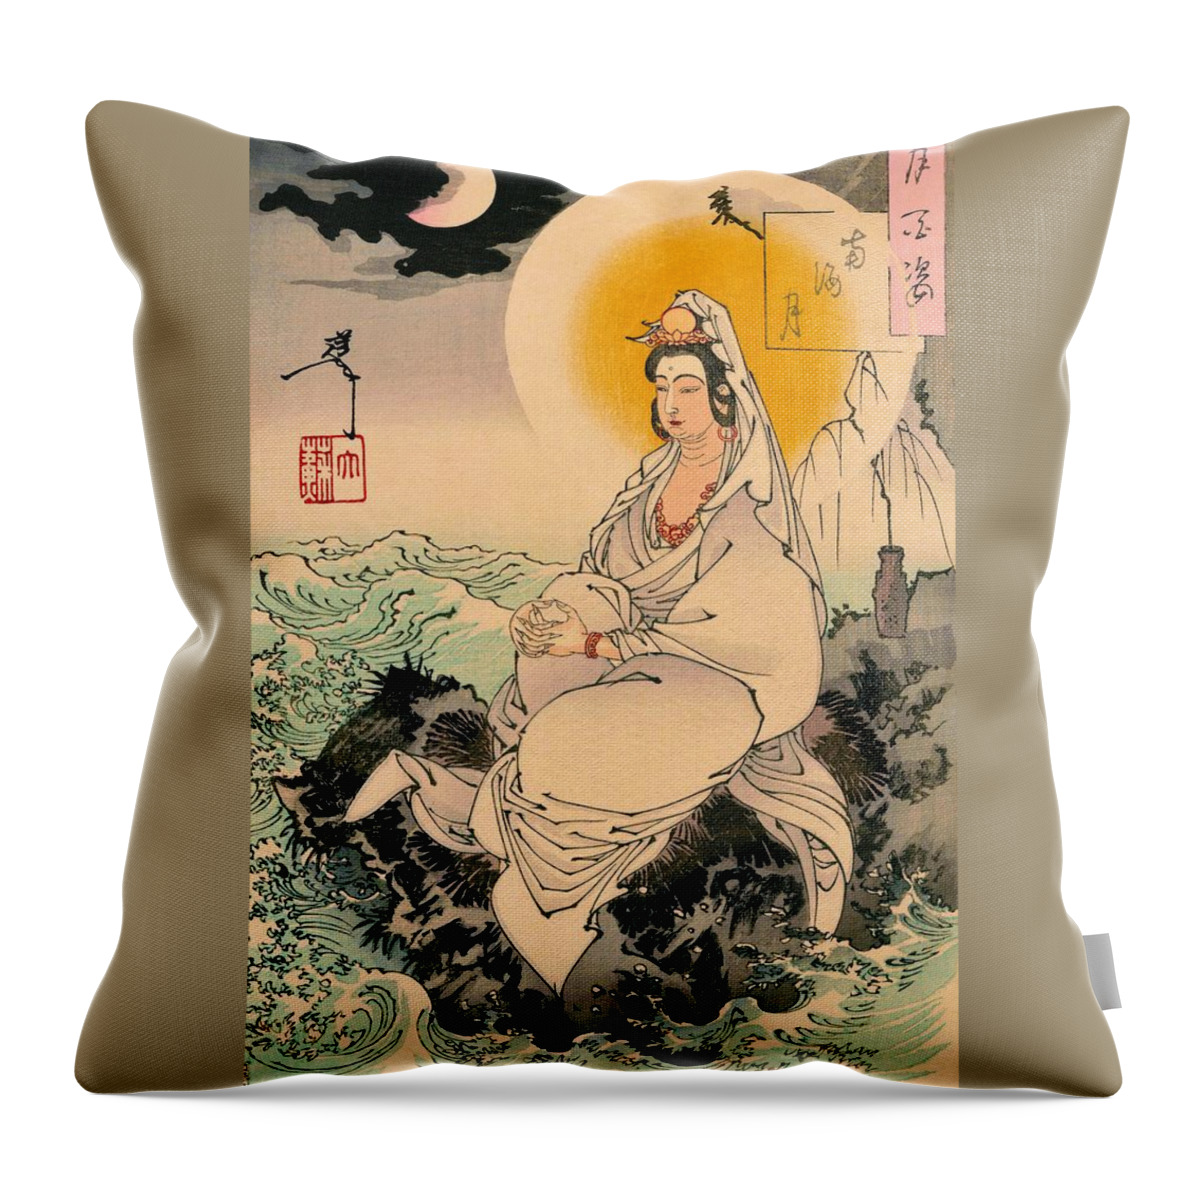 Tsukioka Throw Pillow featuring the painting Top Quality Art - Guanyin by Tsukioka Yoshitoshi